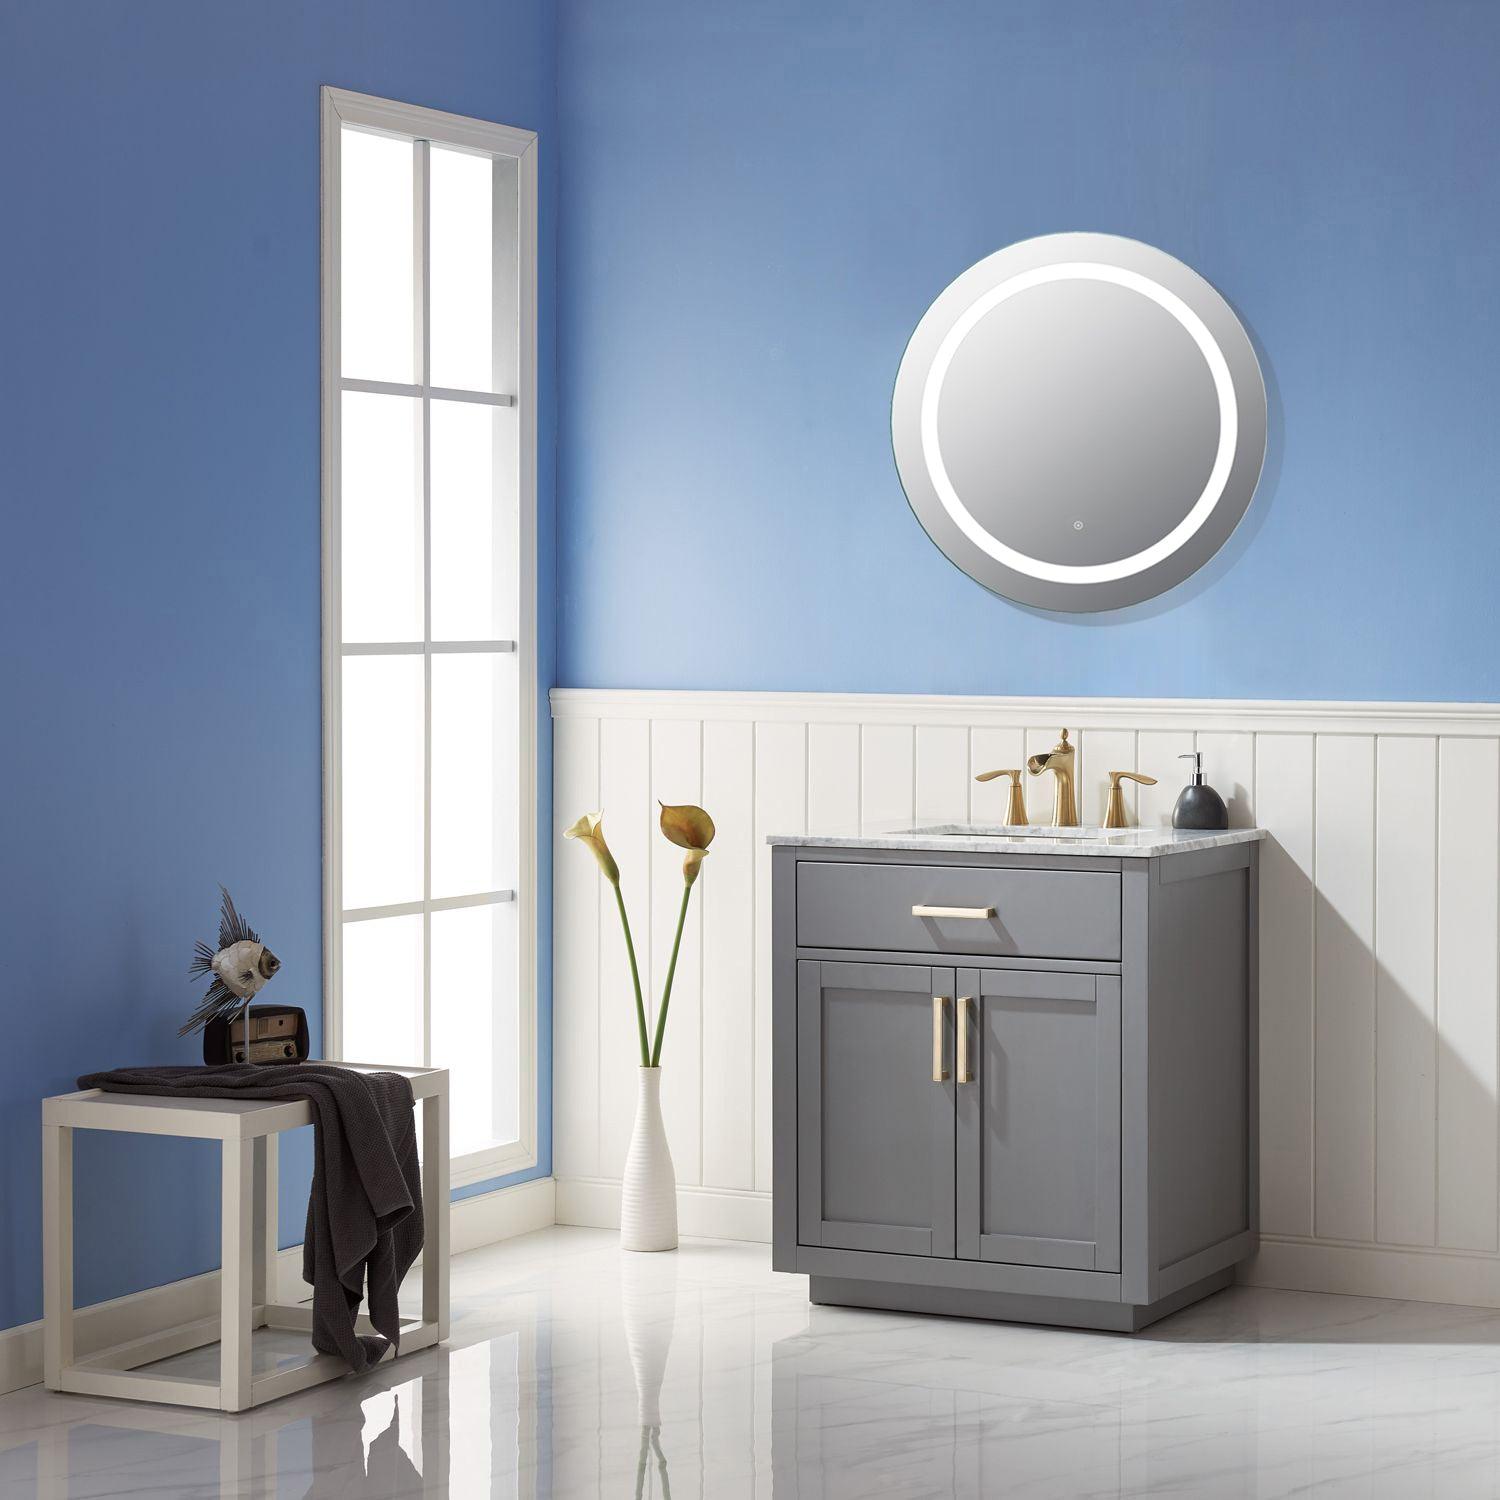 
  
  Altair Padova Round  Frameless Modern LED Bathroom Vanity Mirror
  
